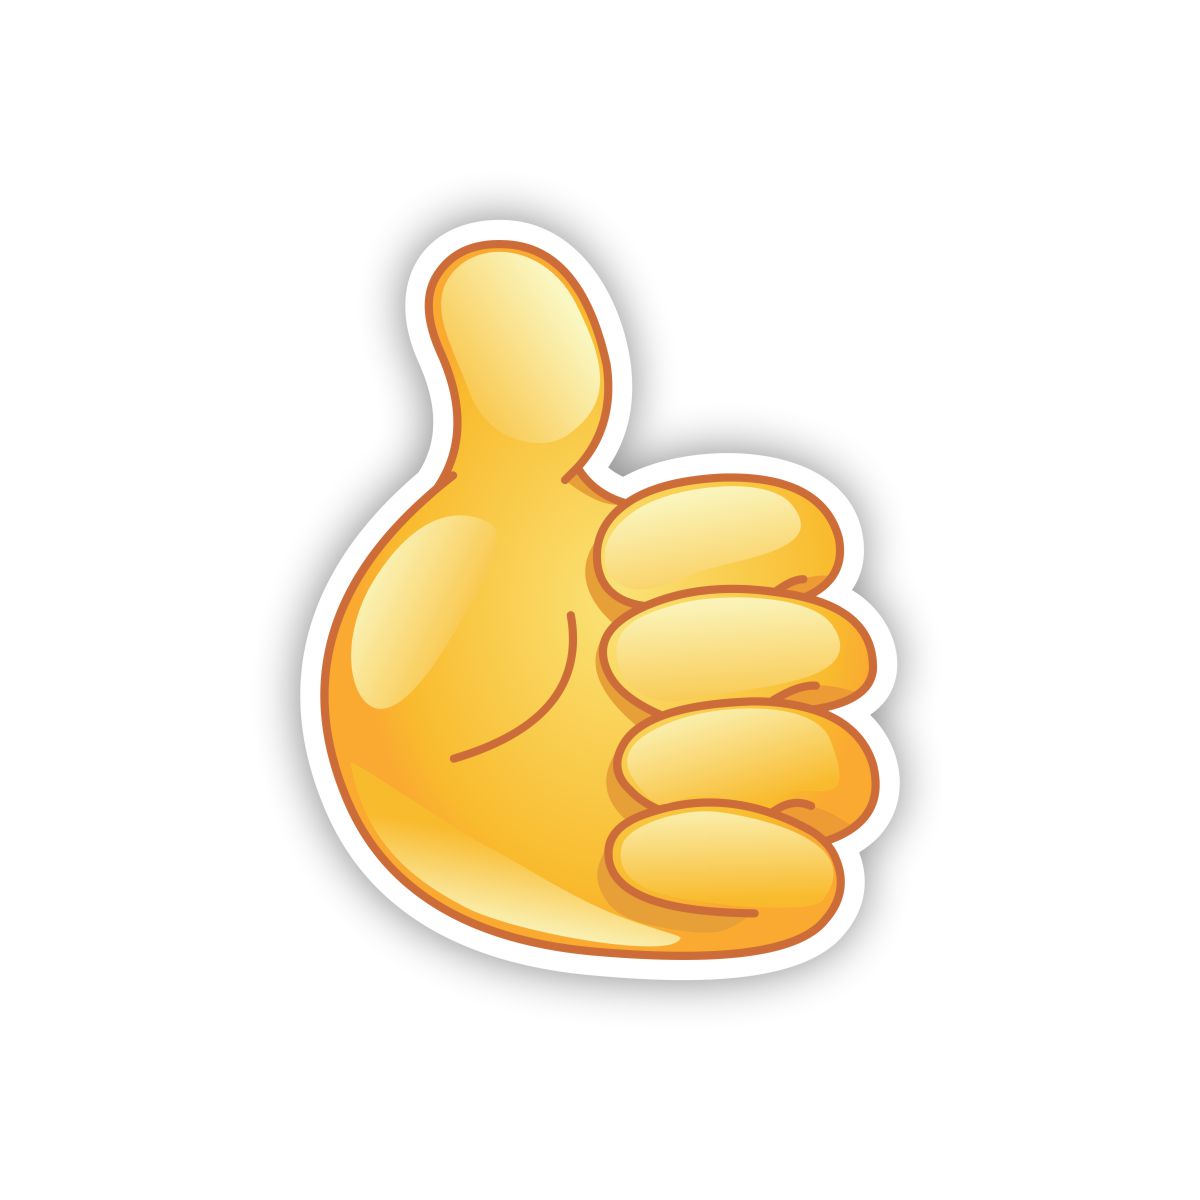 thumbs up emoji england meme